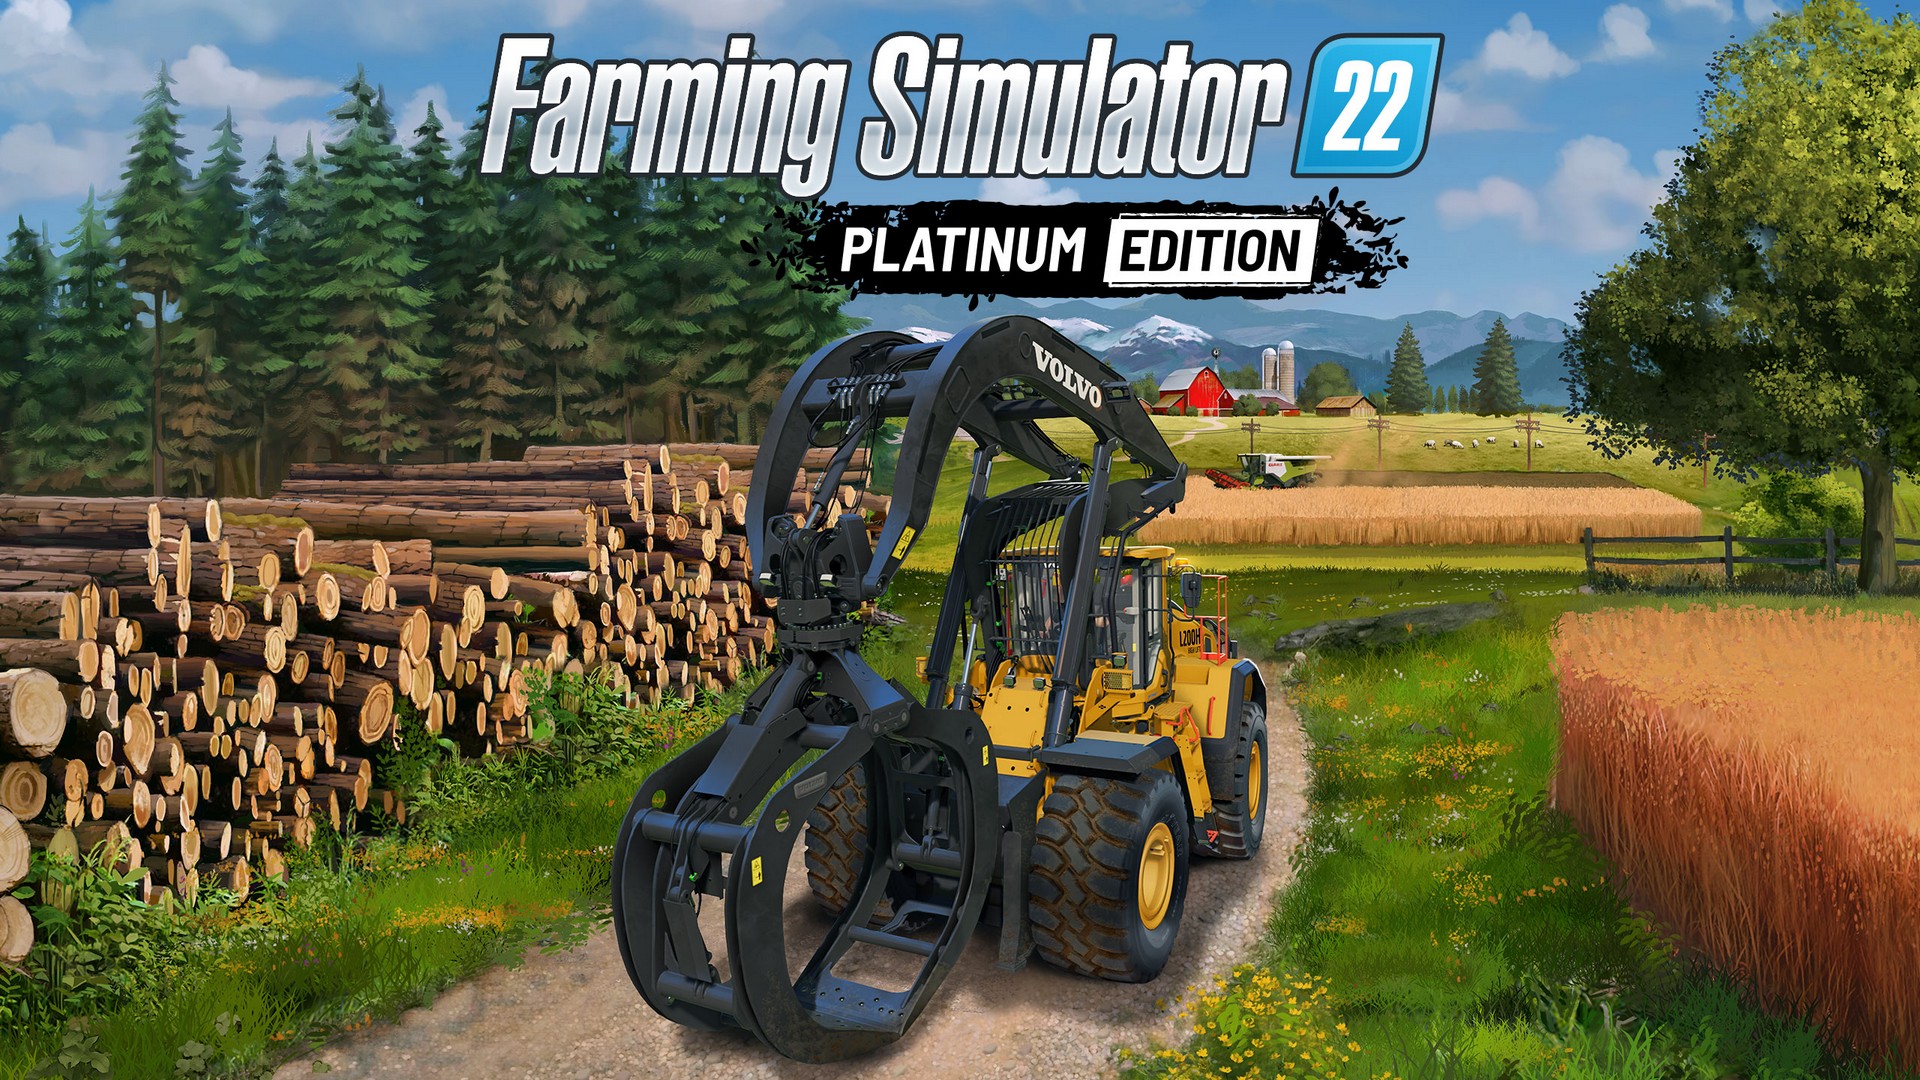 Garage Trailer Introduces Impressive Vehicle Fleet In Farming Simulator 22 – Platinum Edition